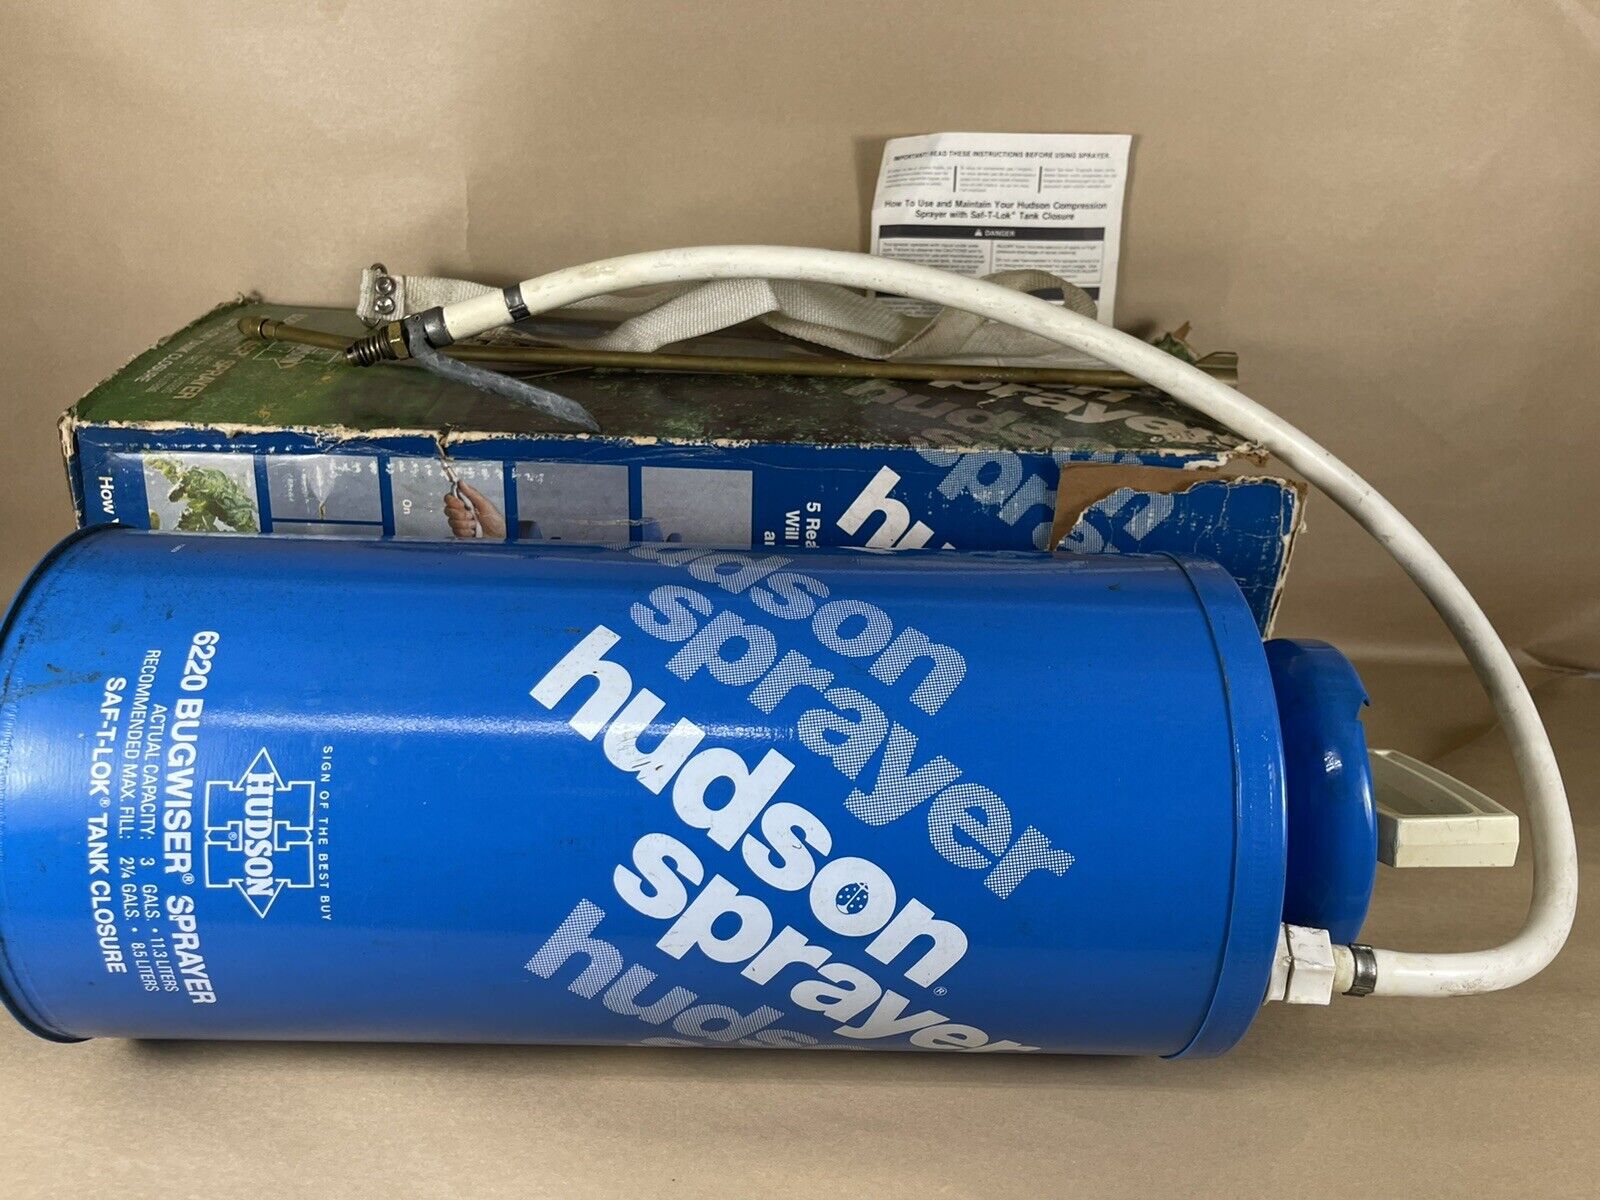 HUDSON SPRAYER Model 6220 - Chicago, Ill - Bugweiser Sprayer